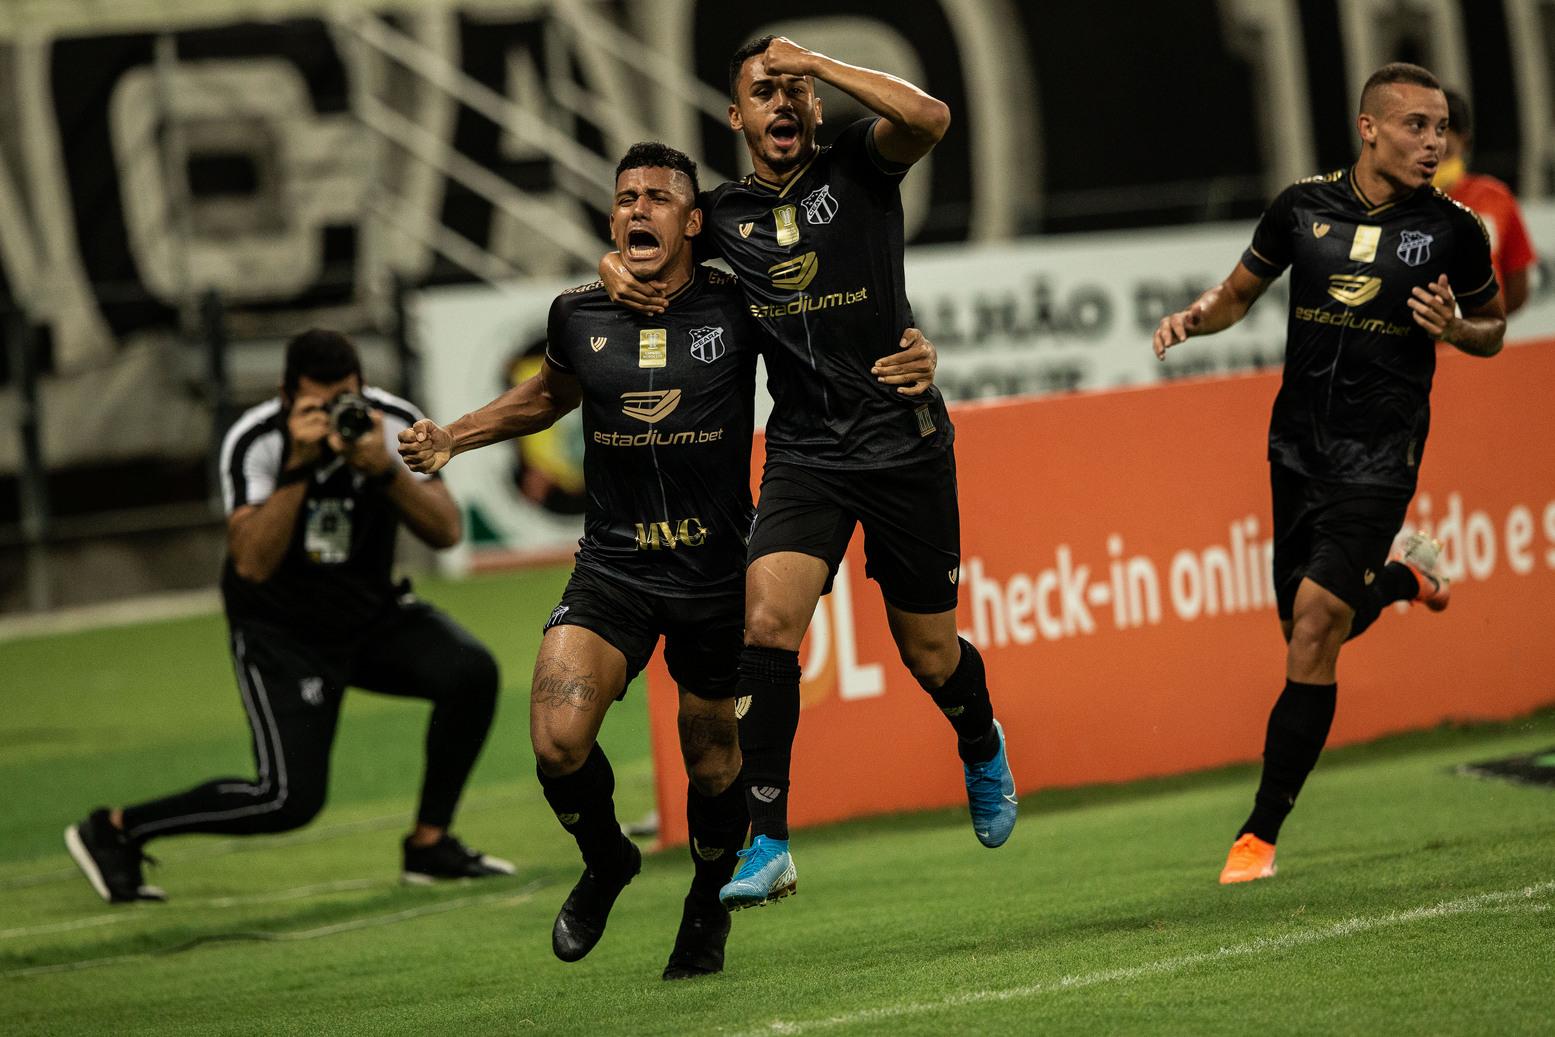 Pro Clubs: Ceará e Fortaleza disputam Libertadores no futebol virtual -  Jogada - Diário do Nordeste